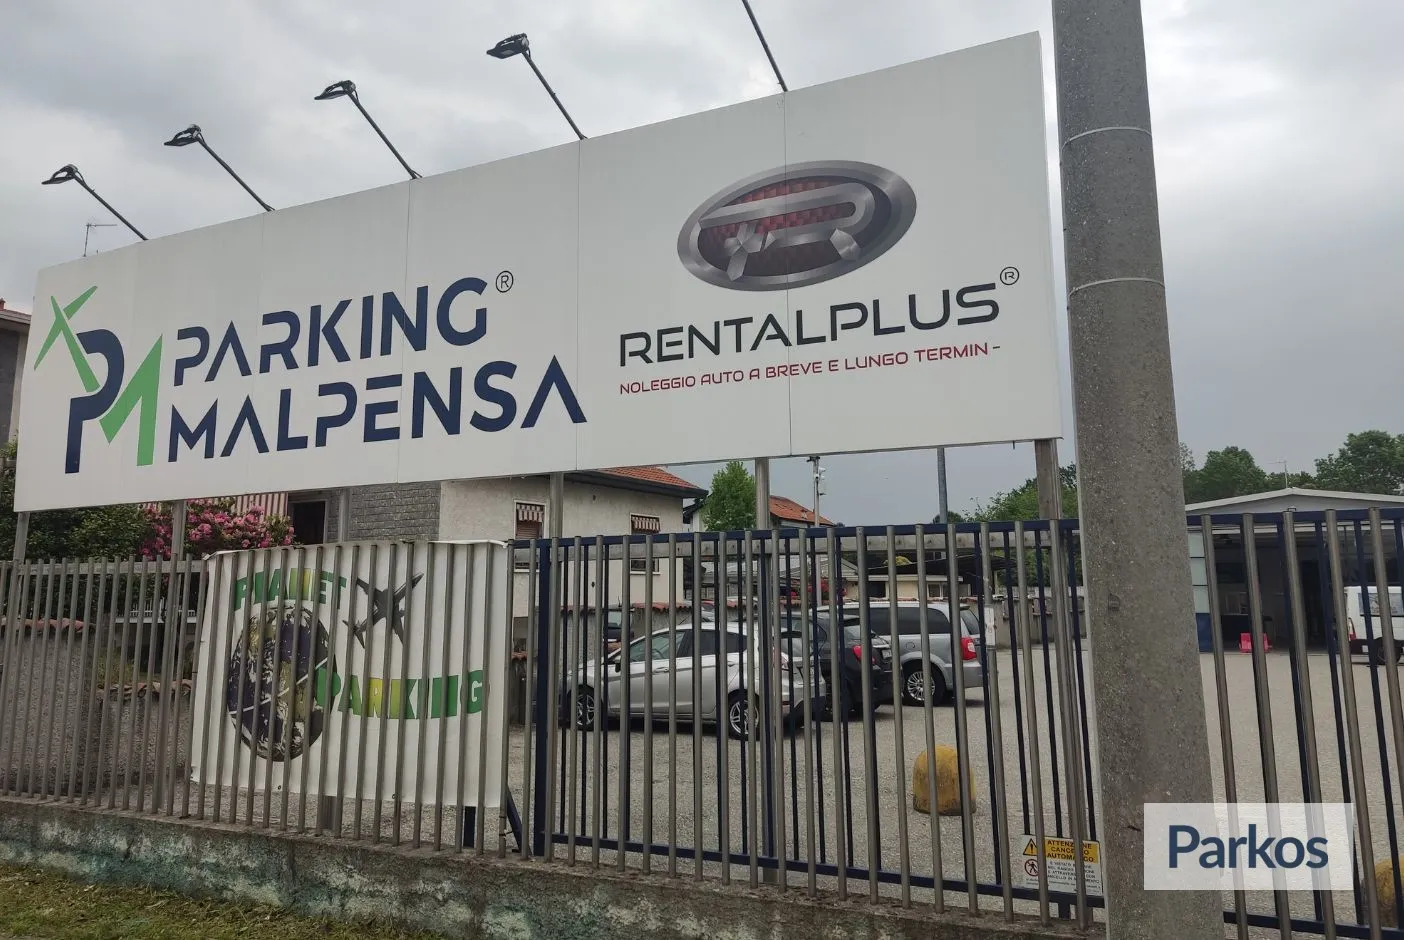 Planet Parking Malpensa (Paga online) - Malpensa Airport Parking - picture 1